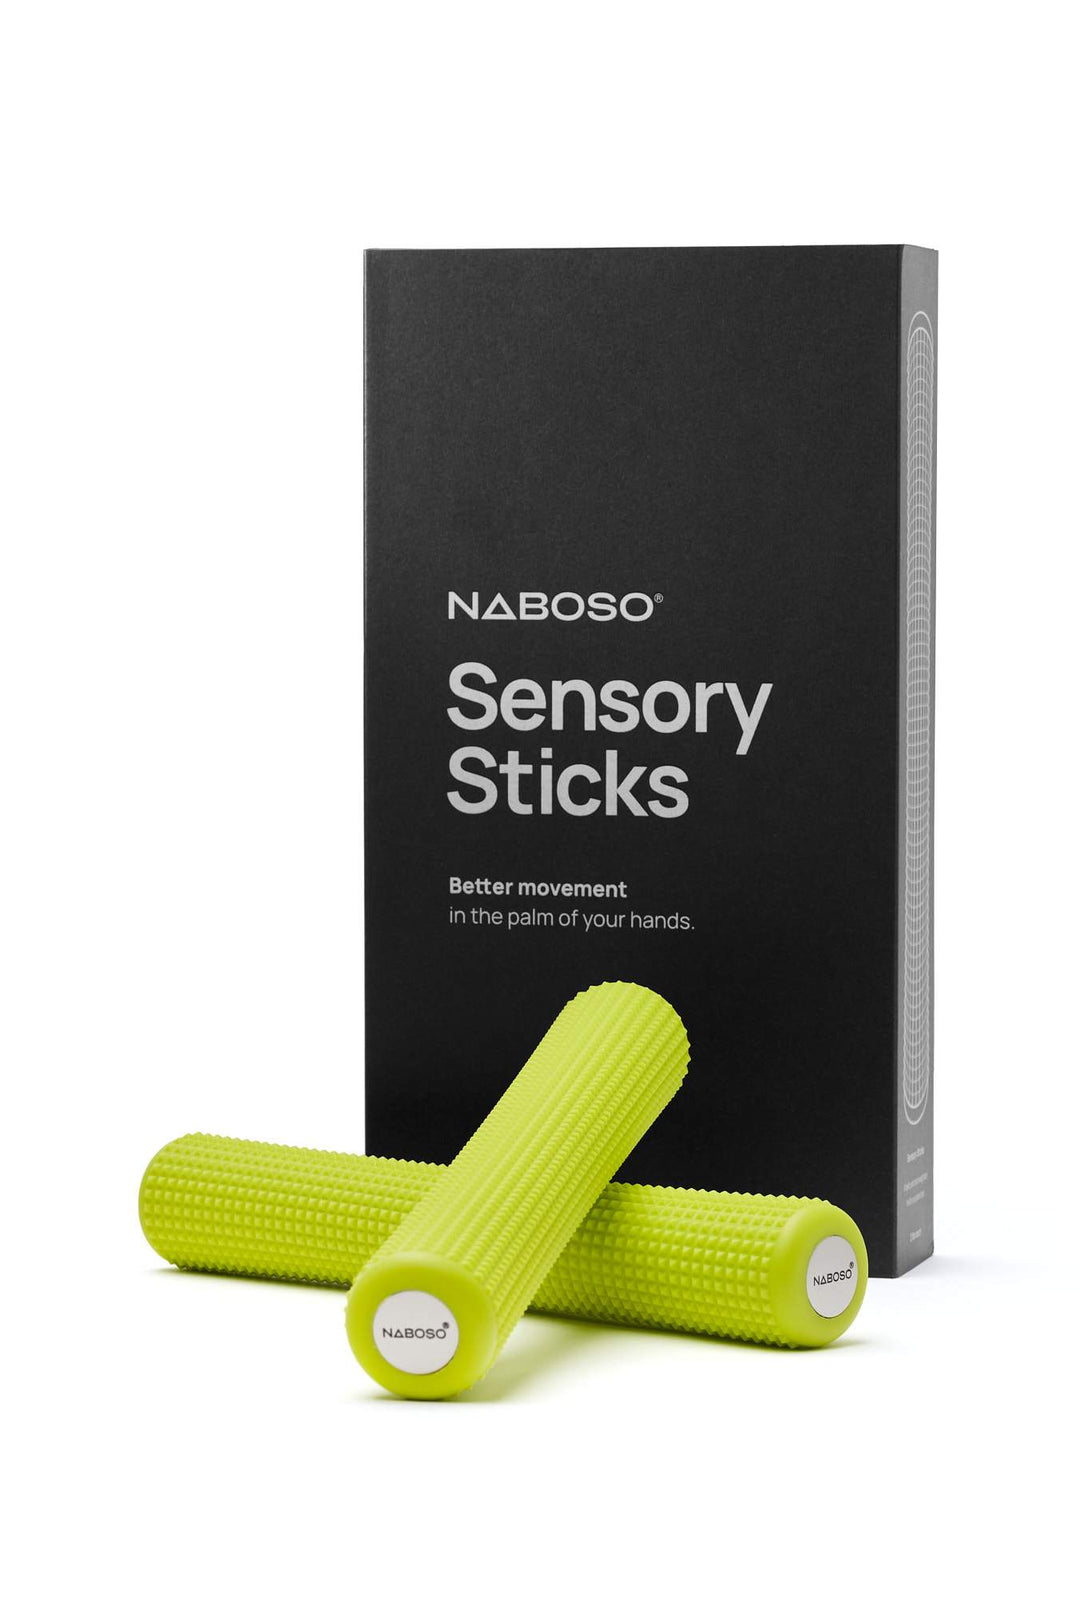 Naboso Sensory Sticks product photo